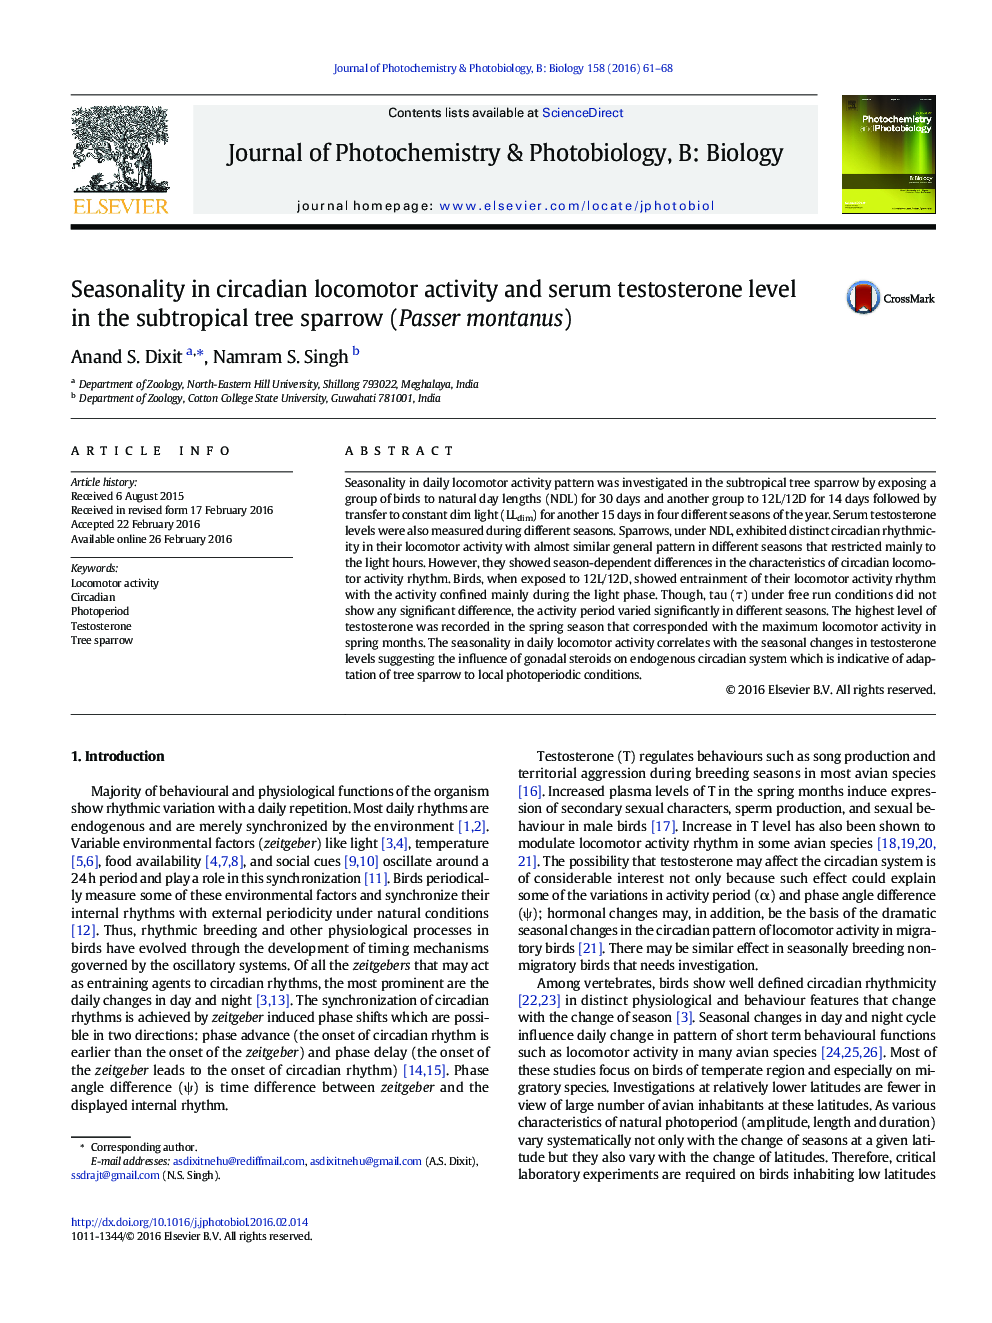 Seasonality in circadian locomotor activity and serum testosterone level in the subtropical tree sparrow (Passer montanus)